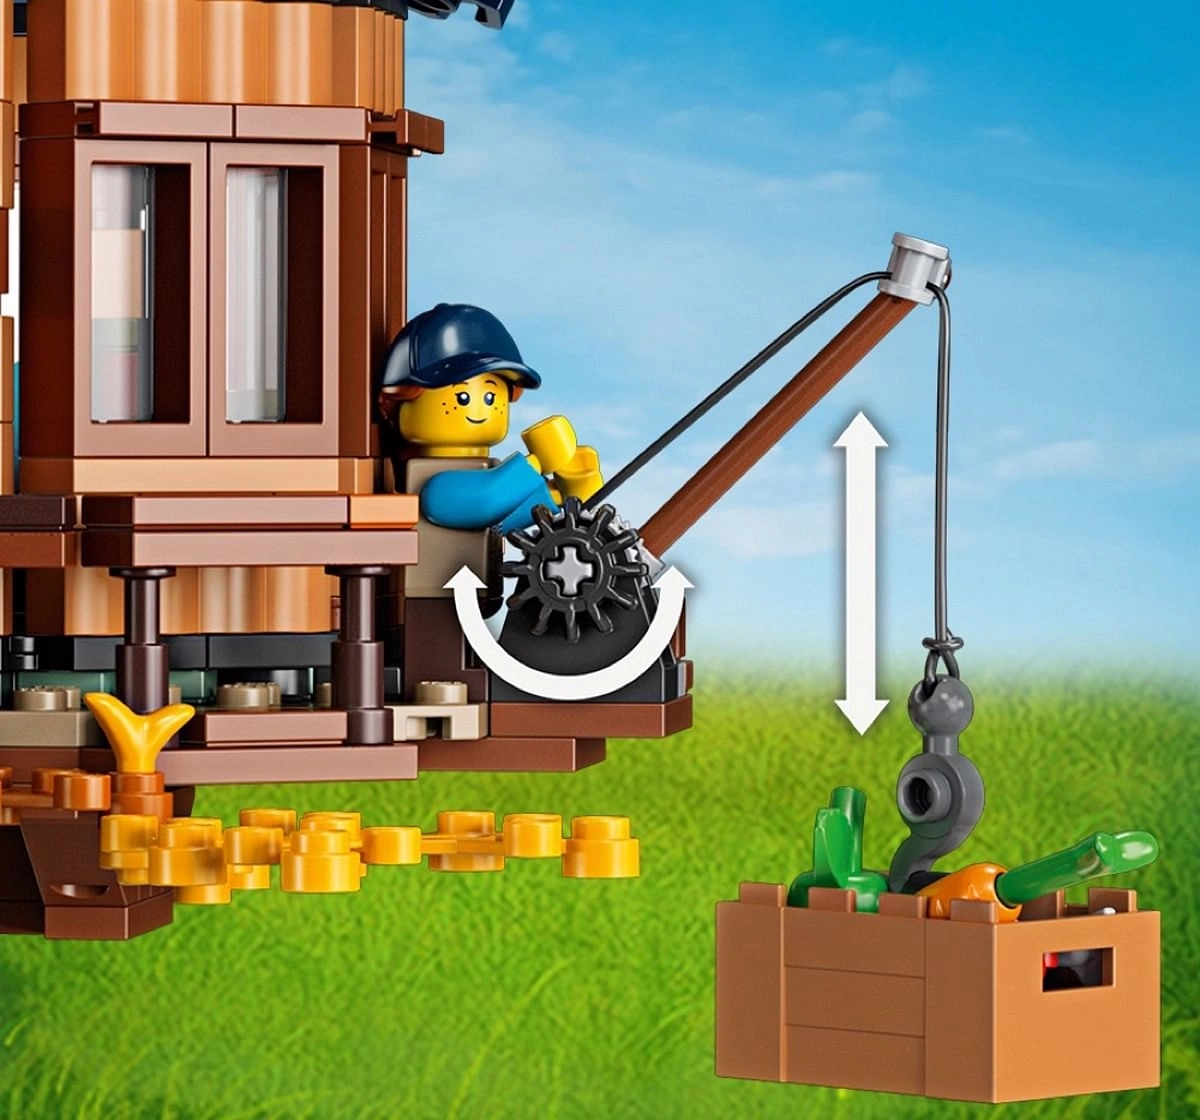 LEGO Ideas 21318 Tree House Building Kit (3036 Piece)